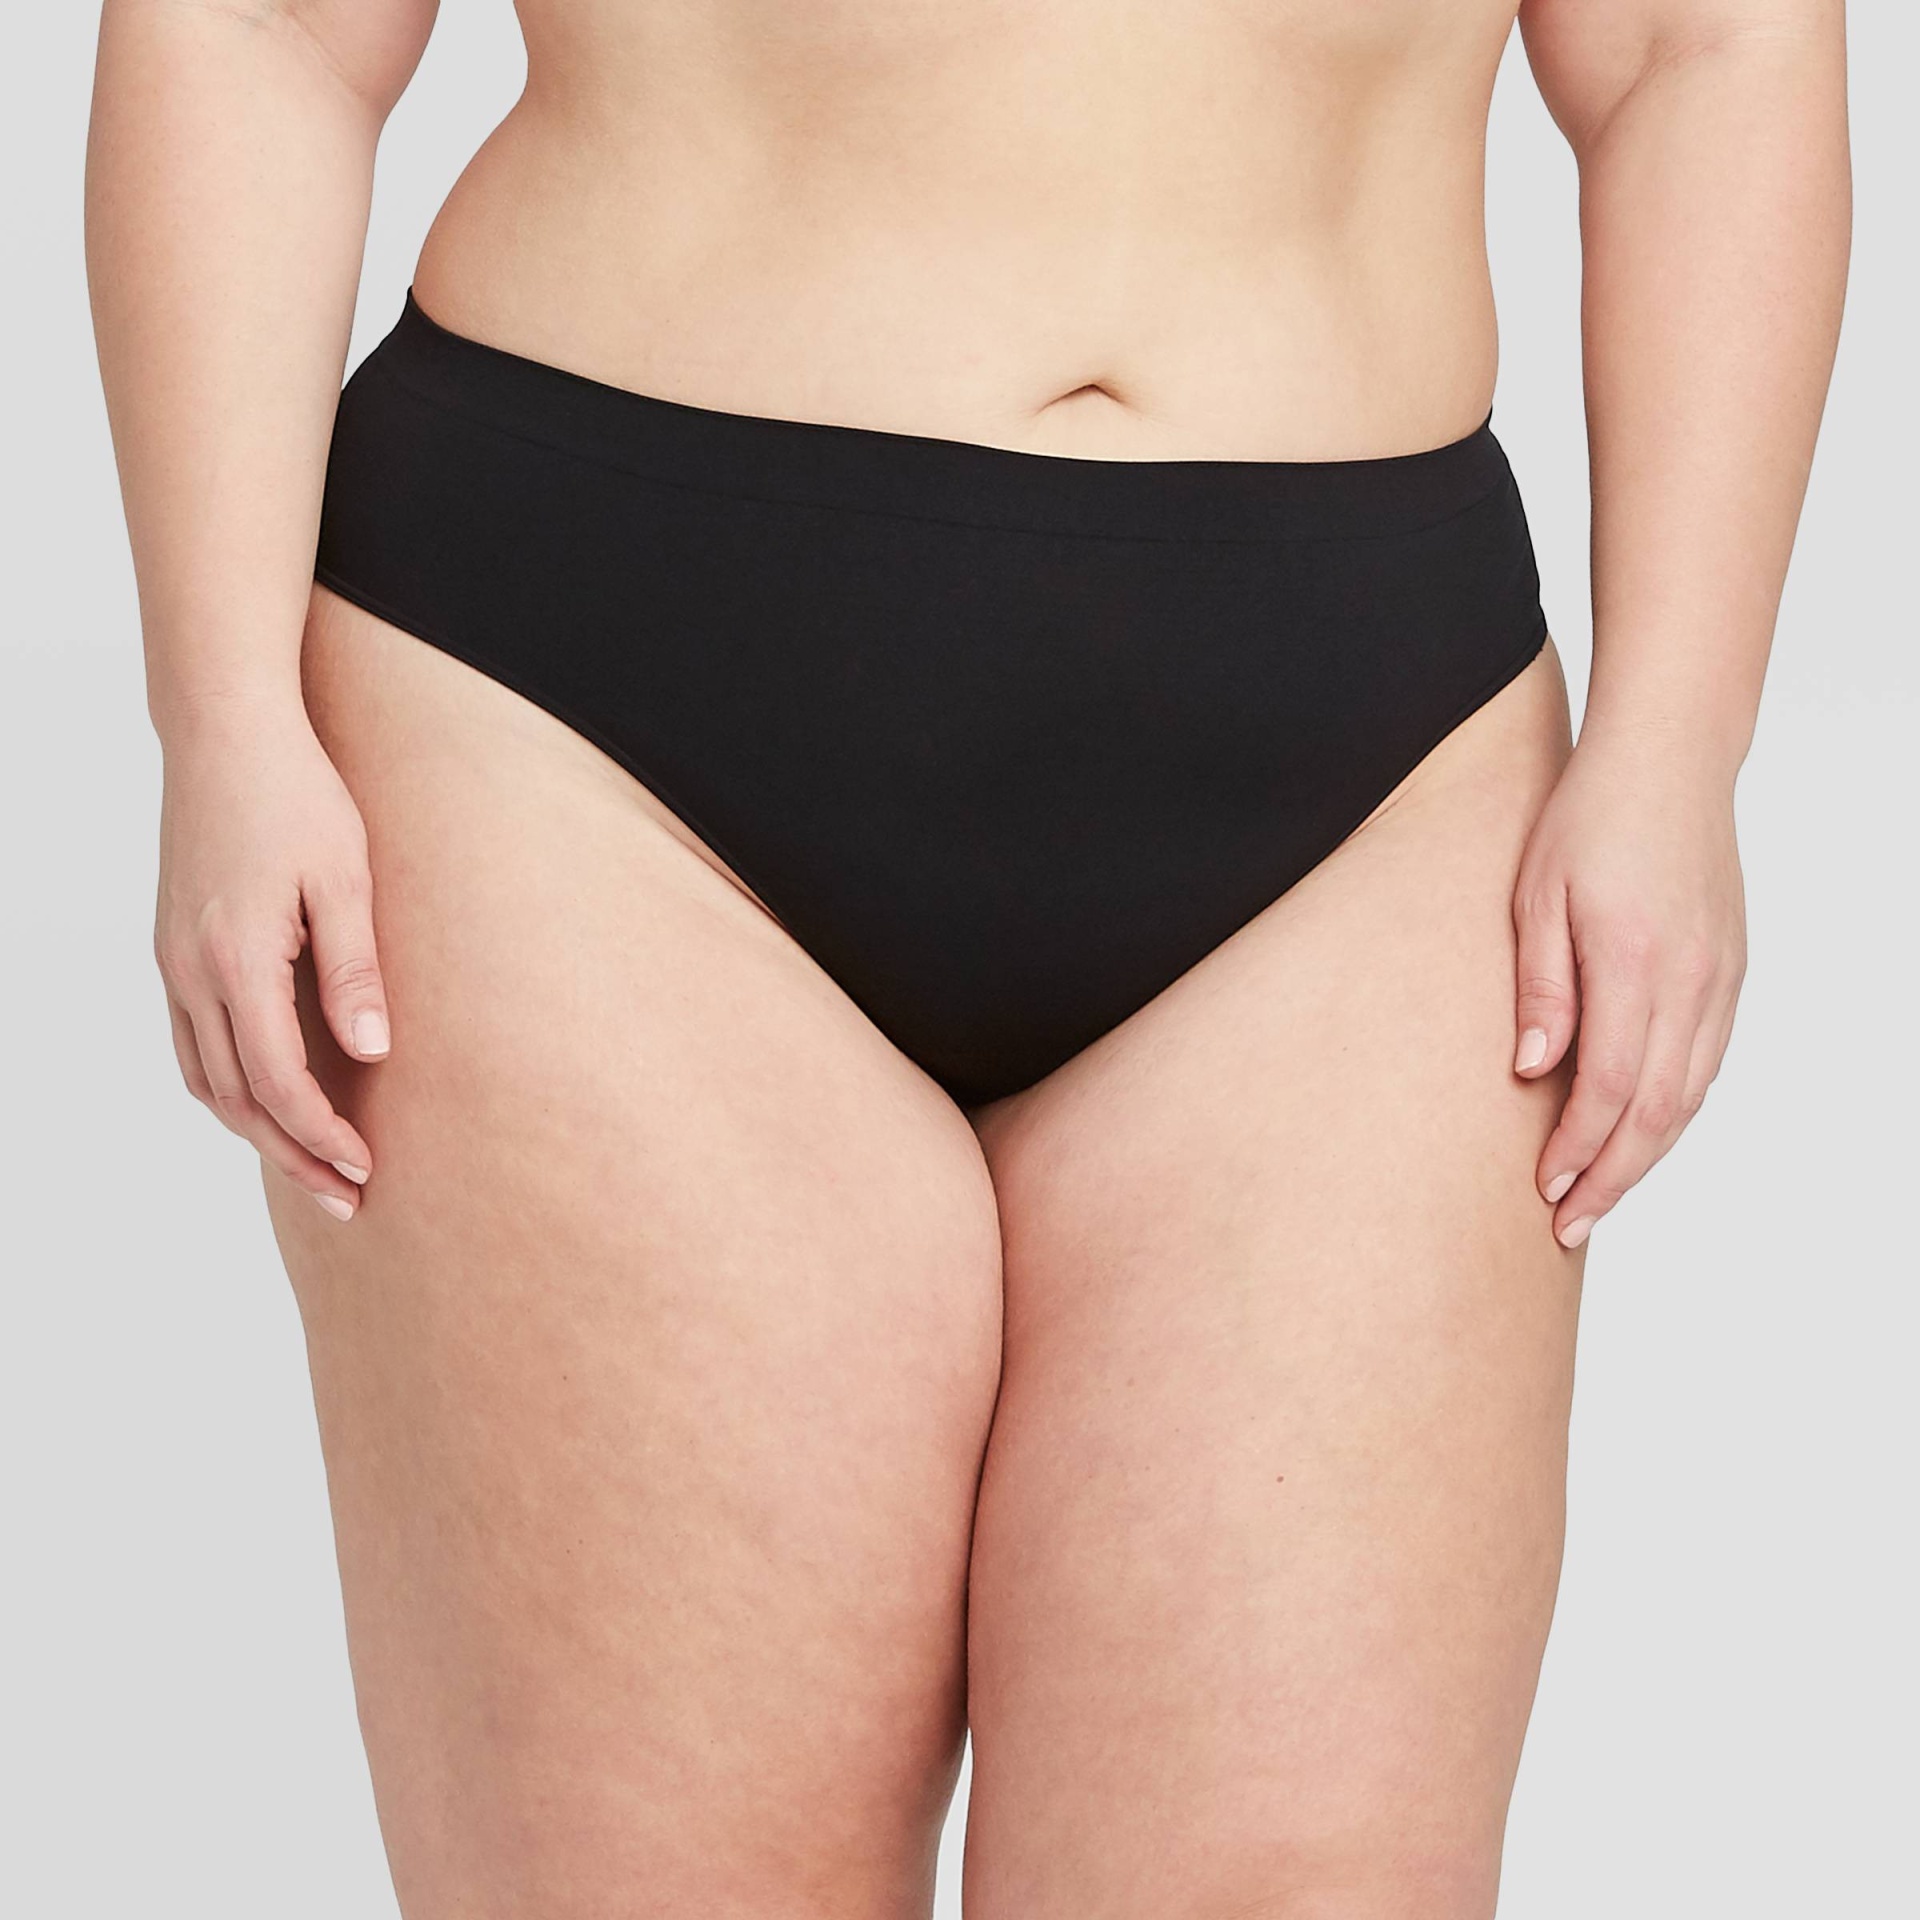 Auden Black Seamless Bikini Underwear Women's Size Medium NEW